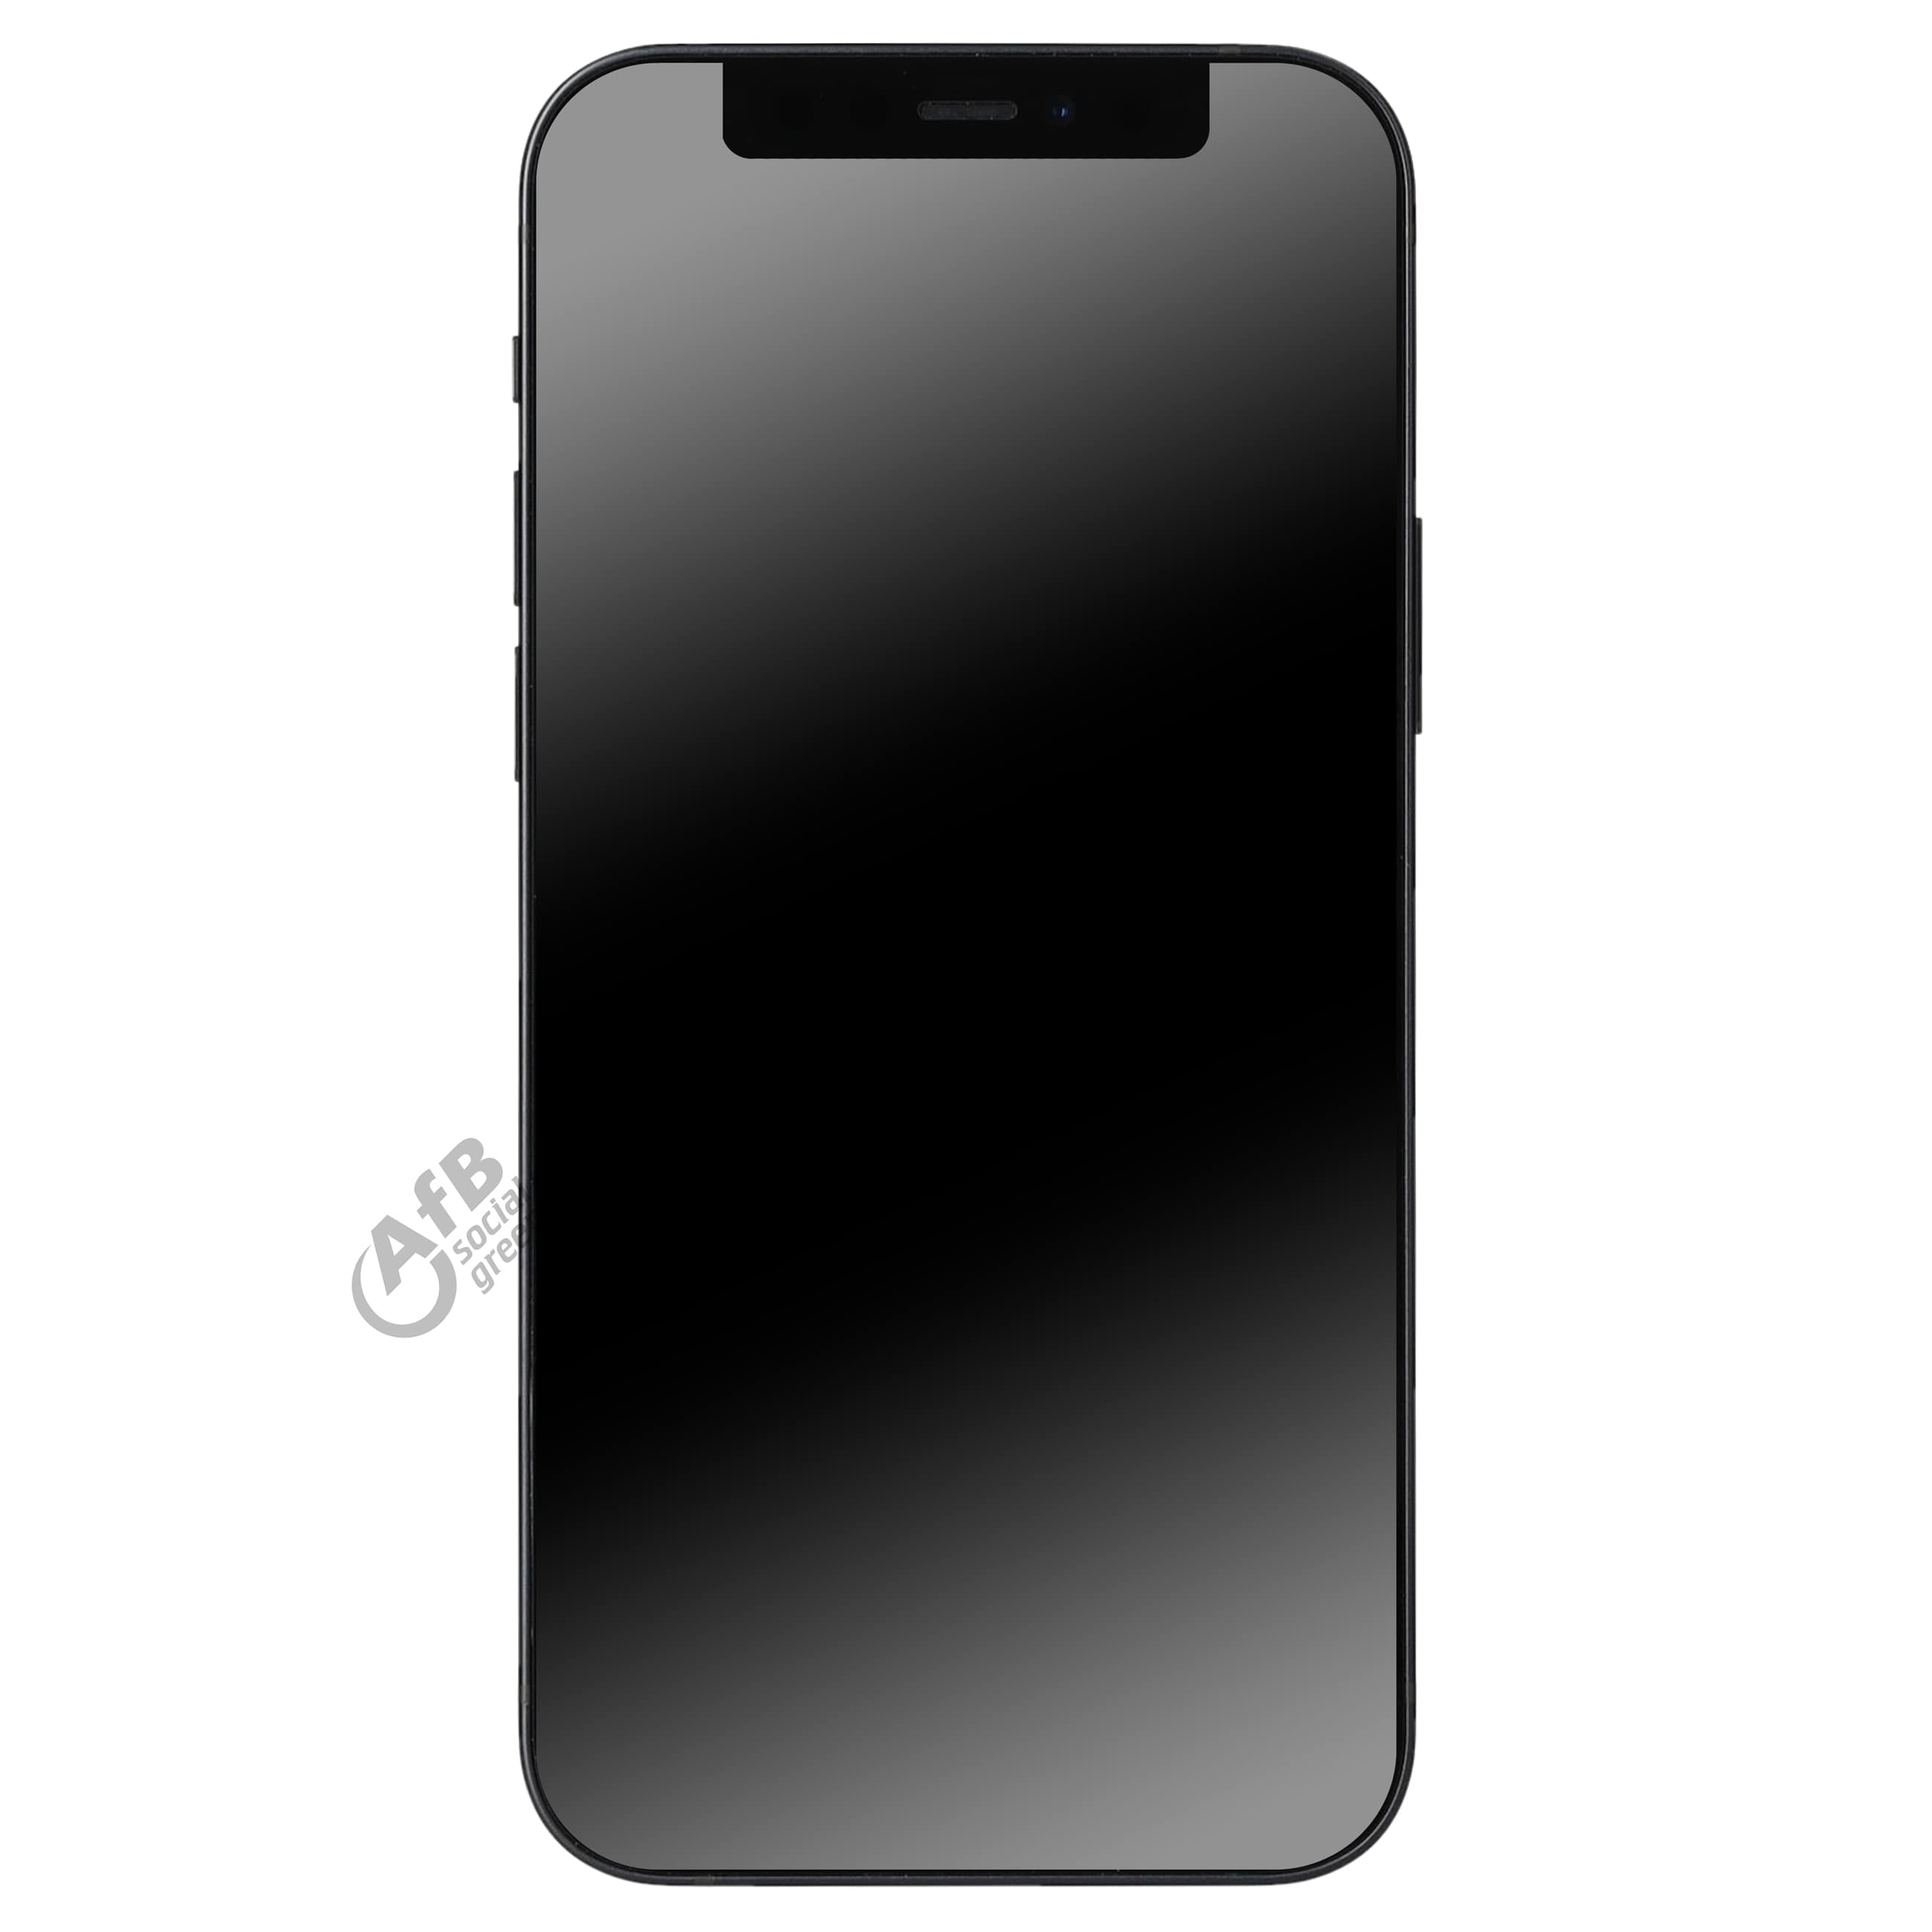 Apple iPhone 12 - 64 GB - Black